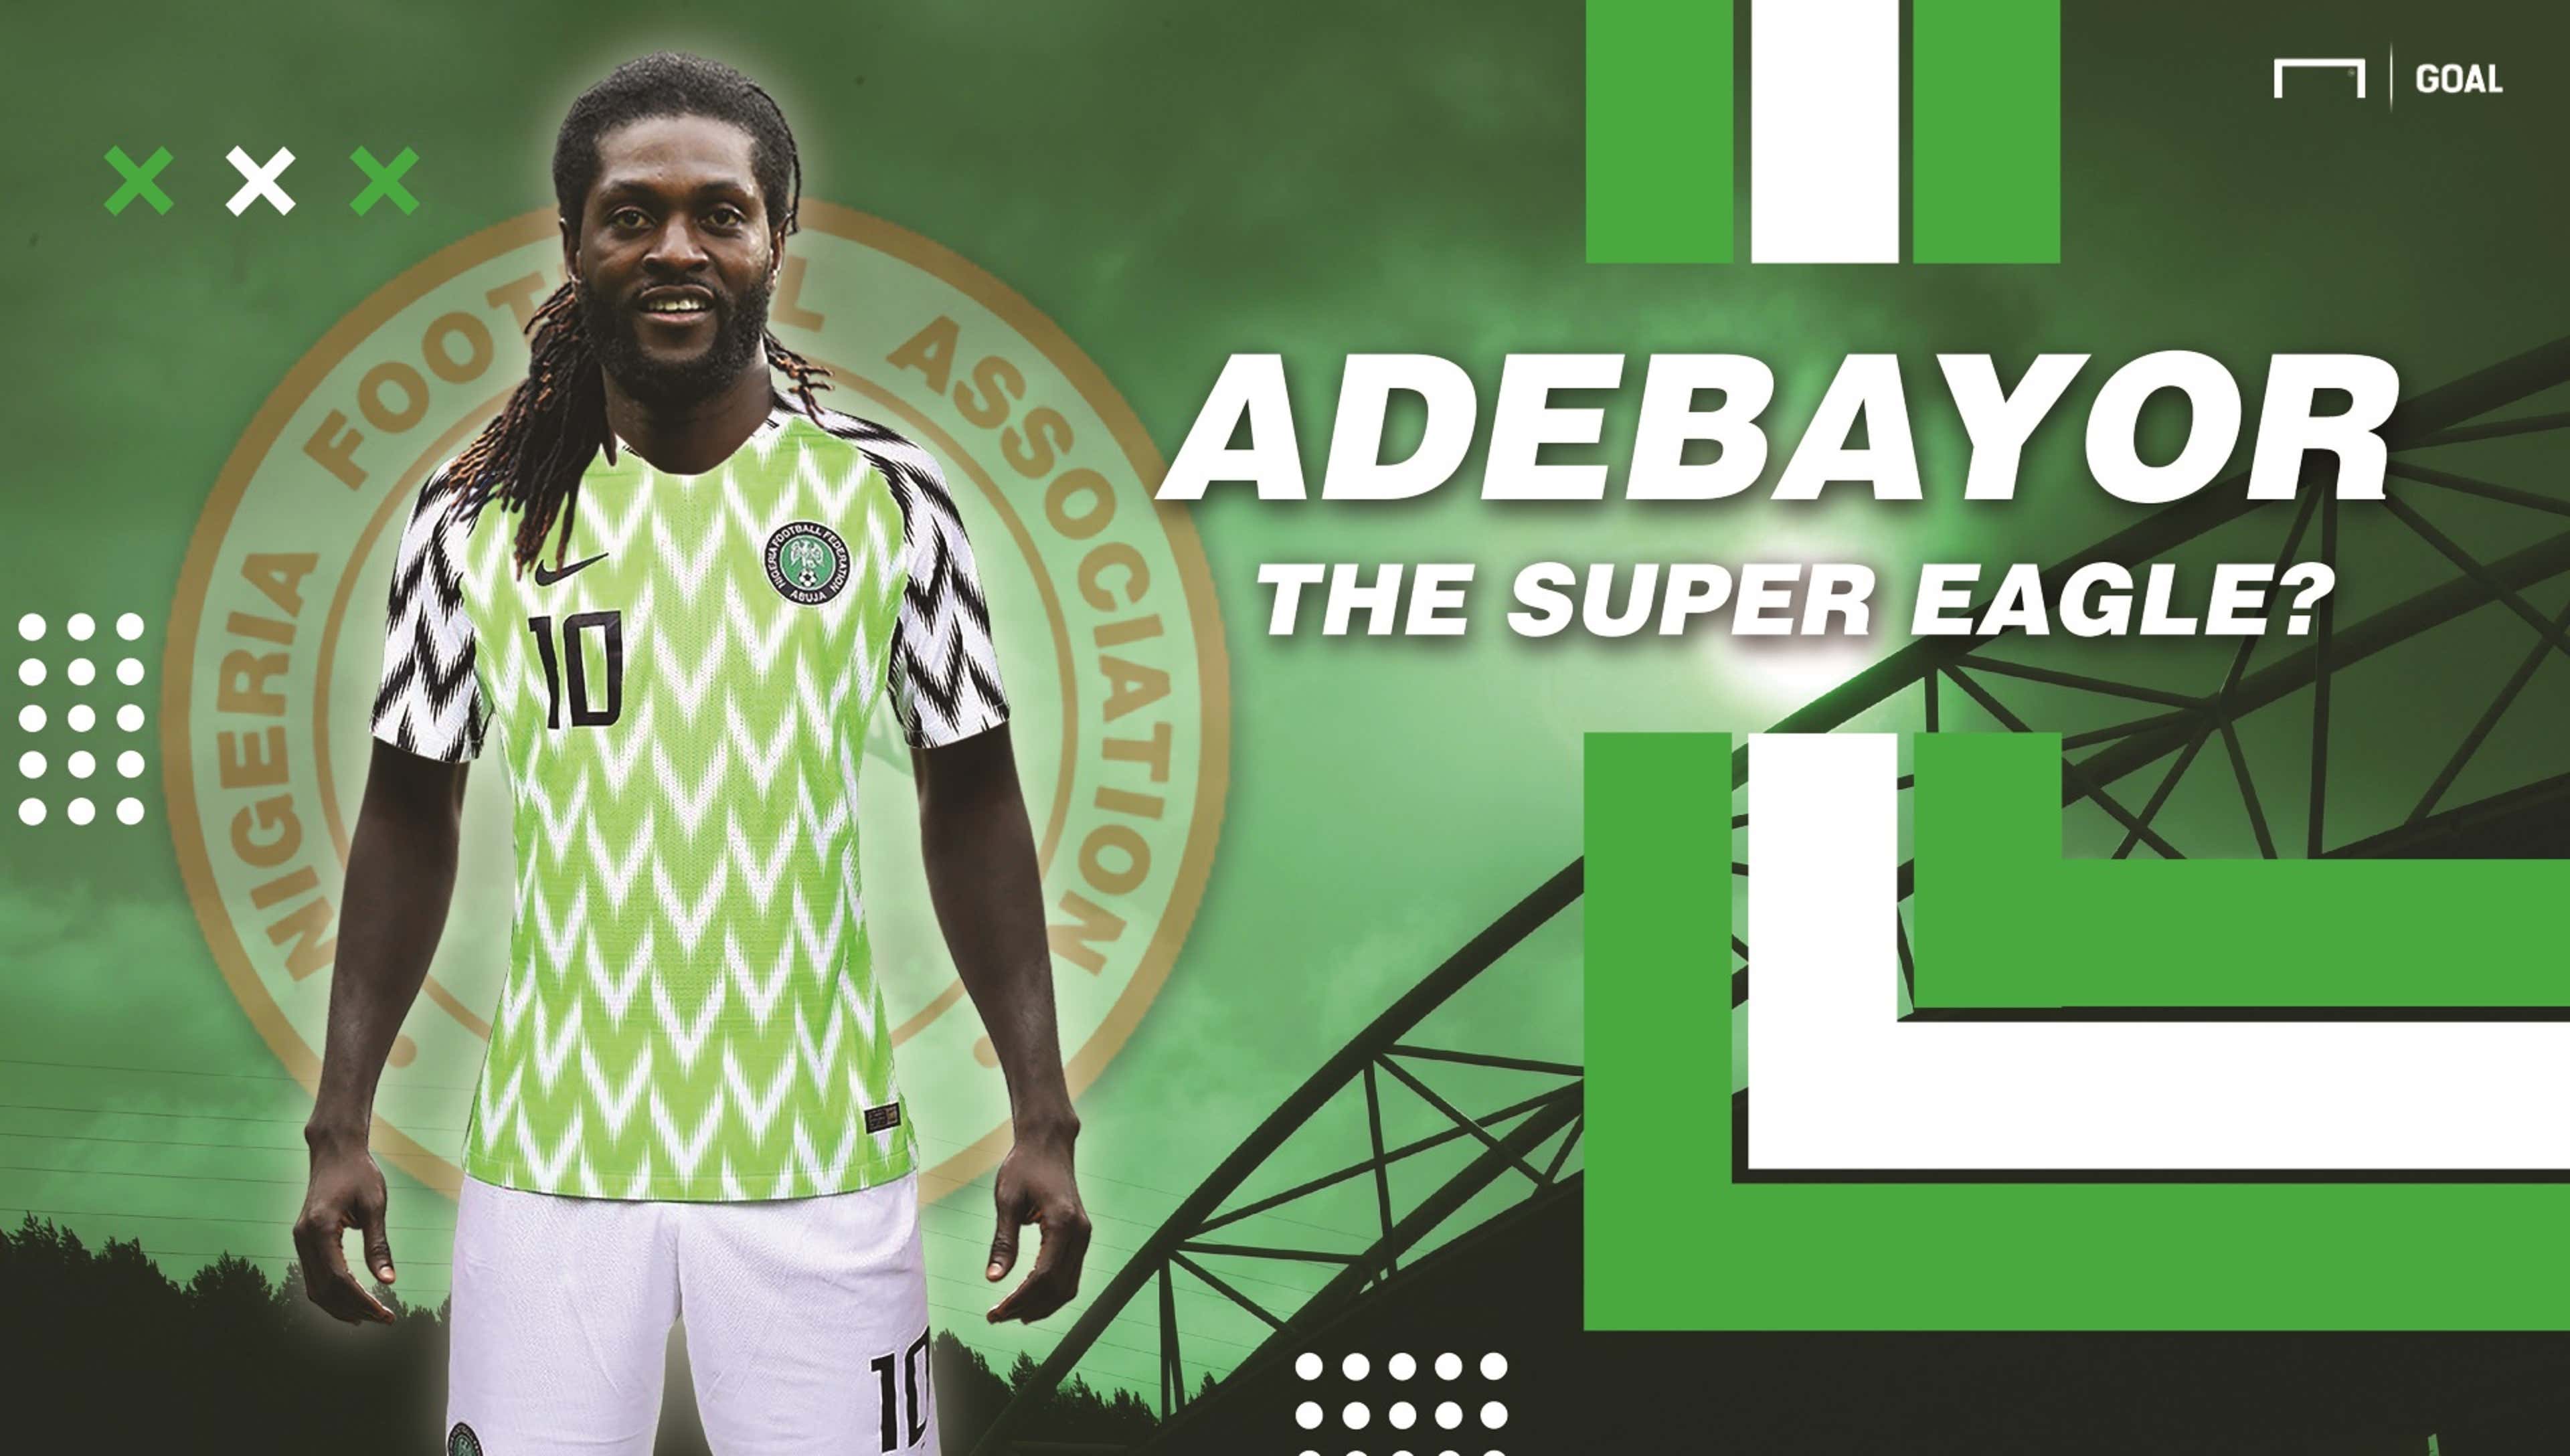 Emmanuel Adebayor the Super Eagle